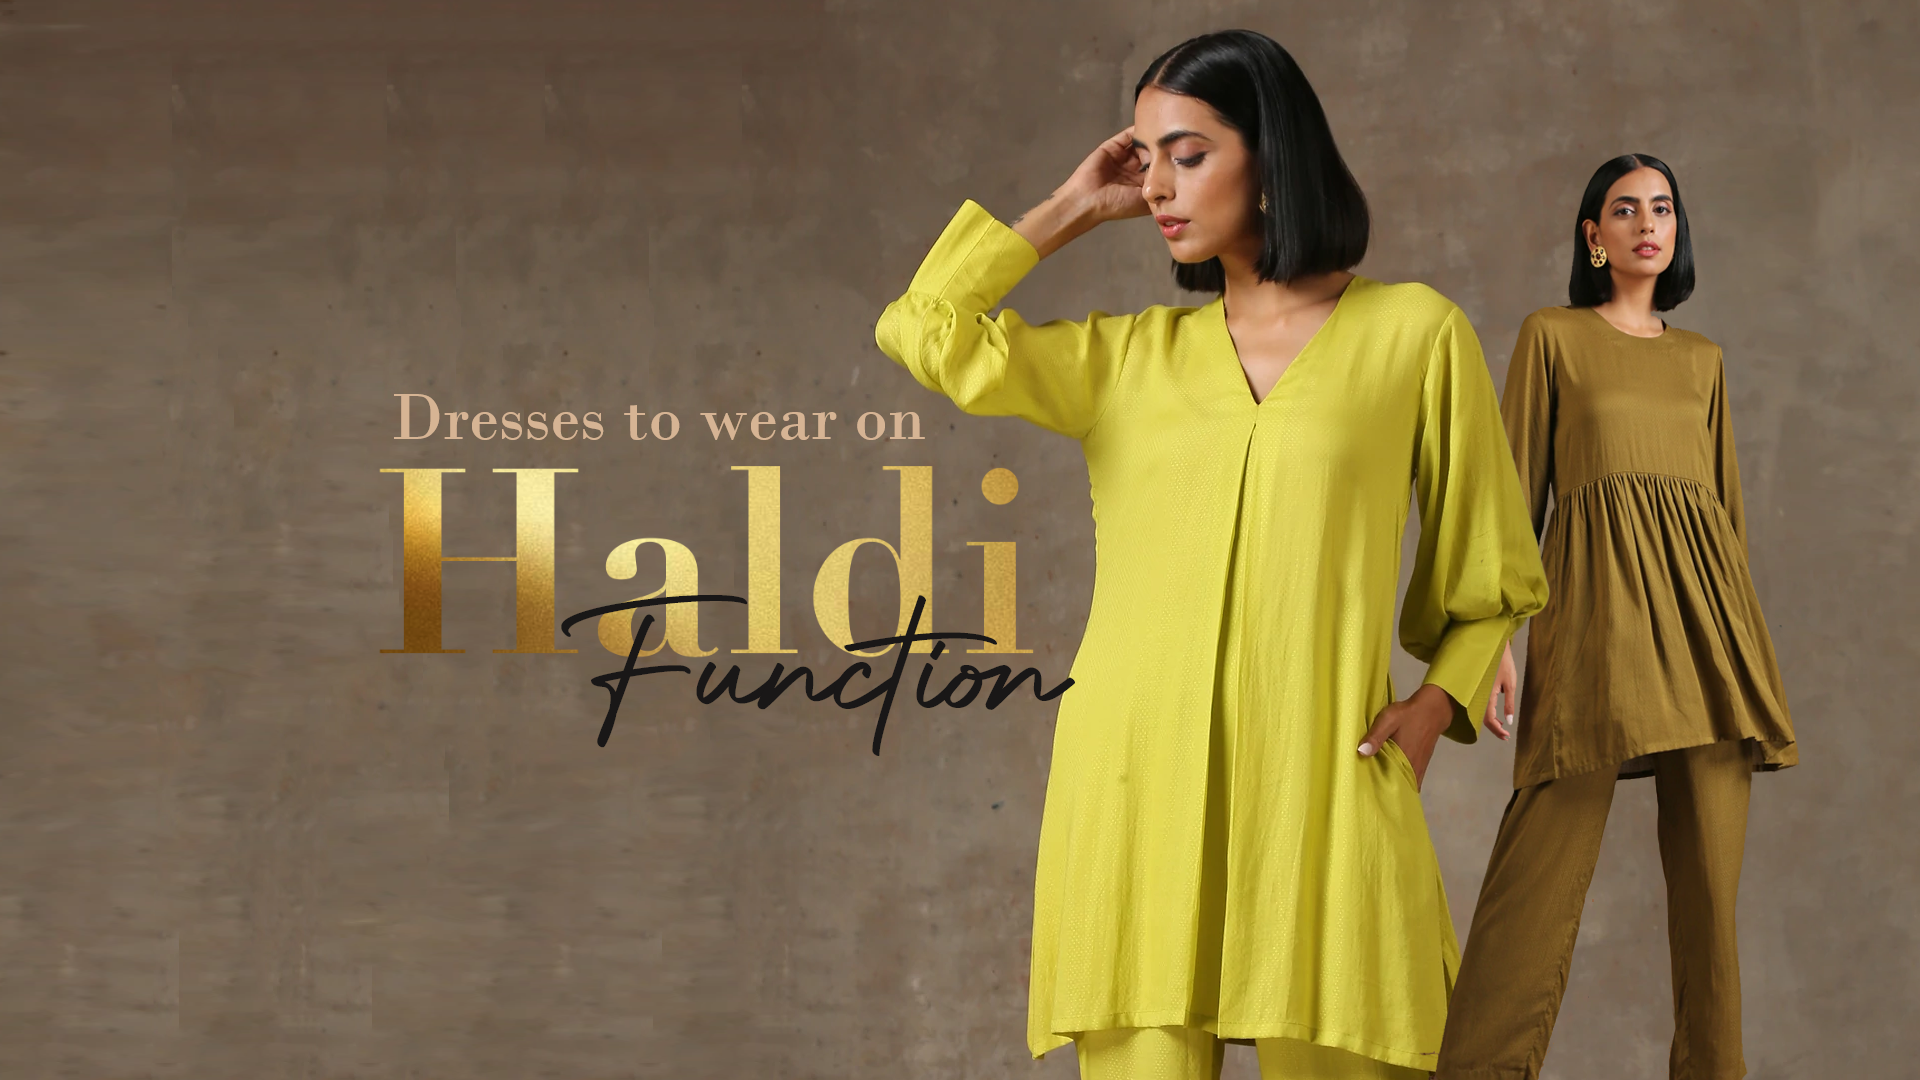 Haldi Ceremony Dresses | Haldi Function Dresses Online - Mirraw